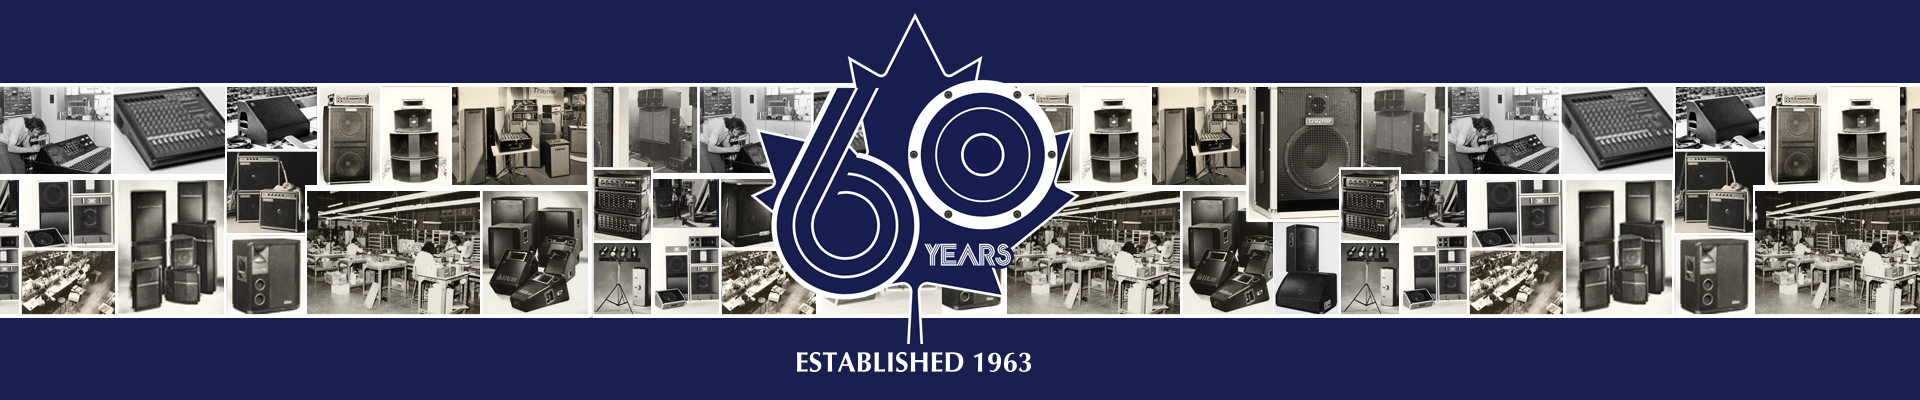 Yorkville 60th Anniversary